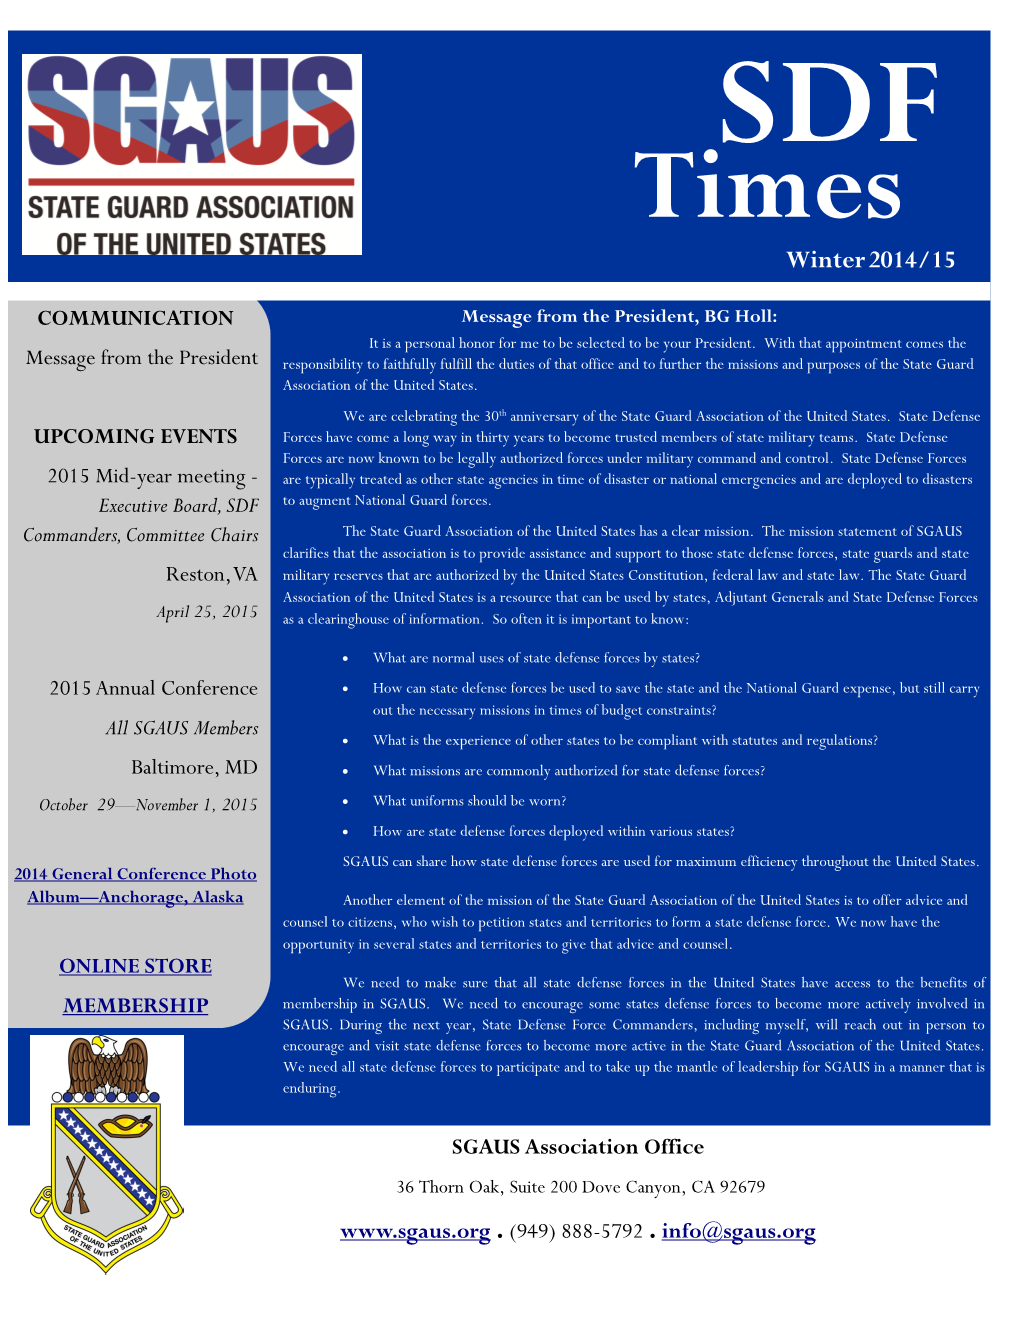 SDF Times Newsletter – Winter 2014